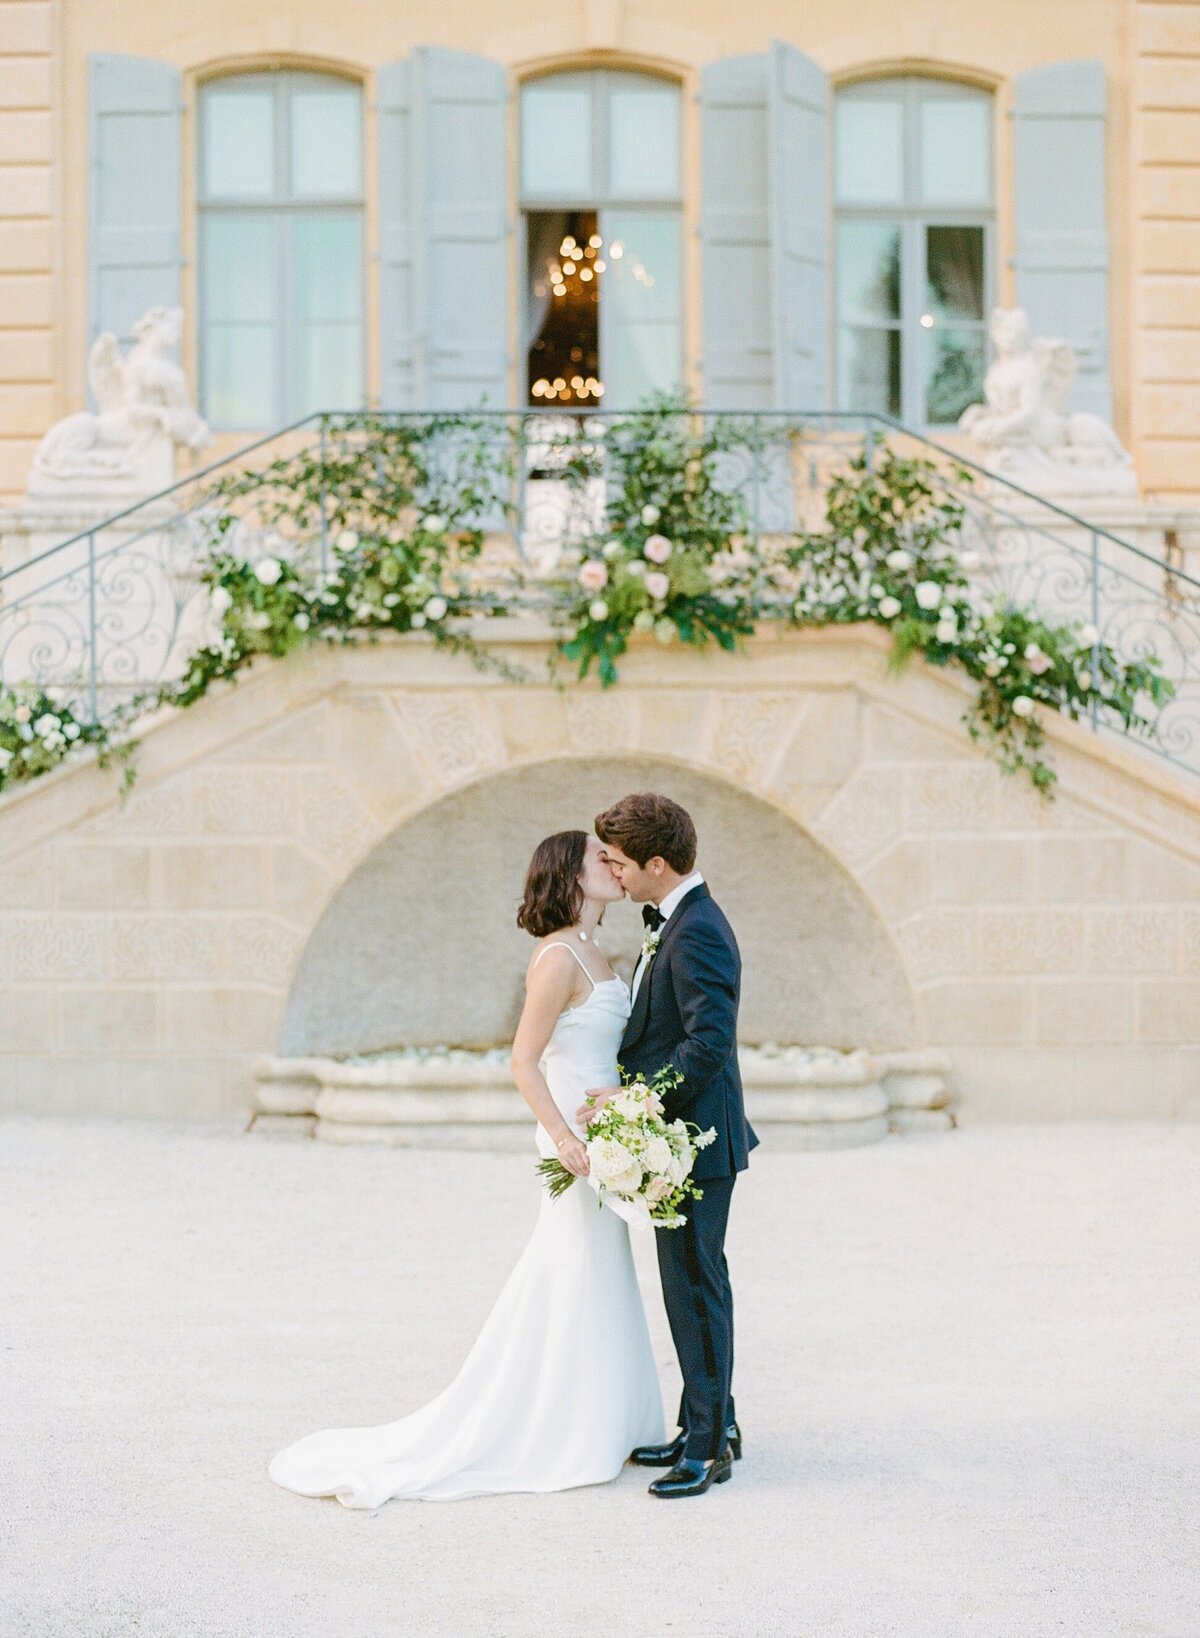 Bride_&_Groom_S&J_©_Oliver_Fly_Photography_16